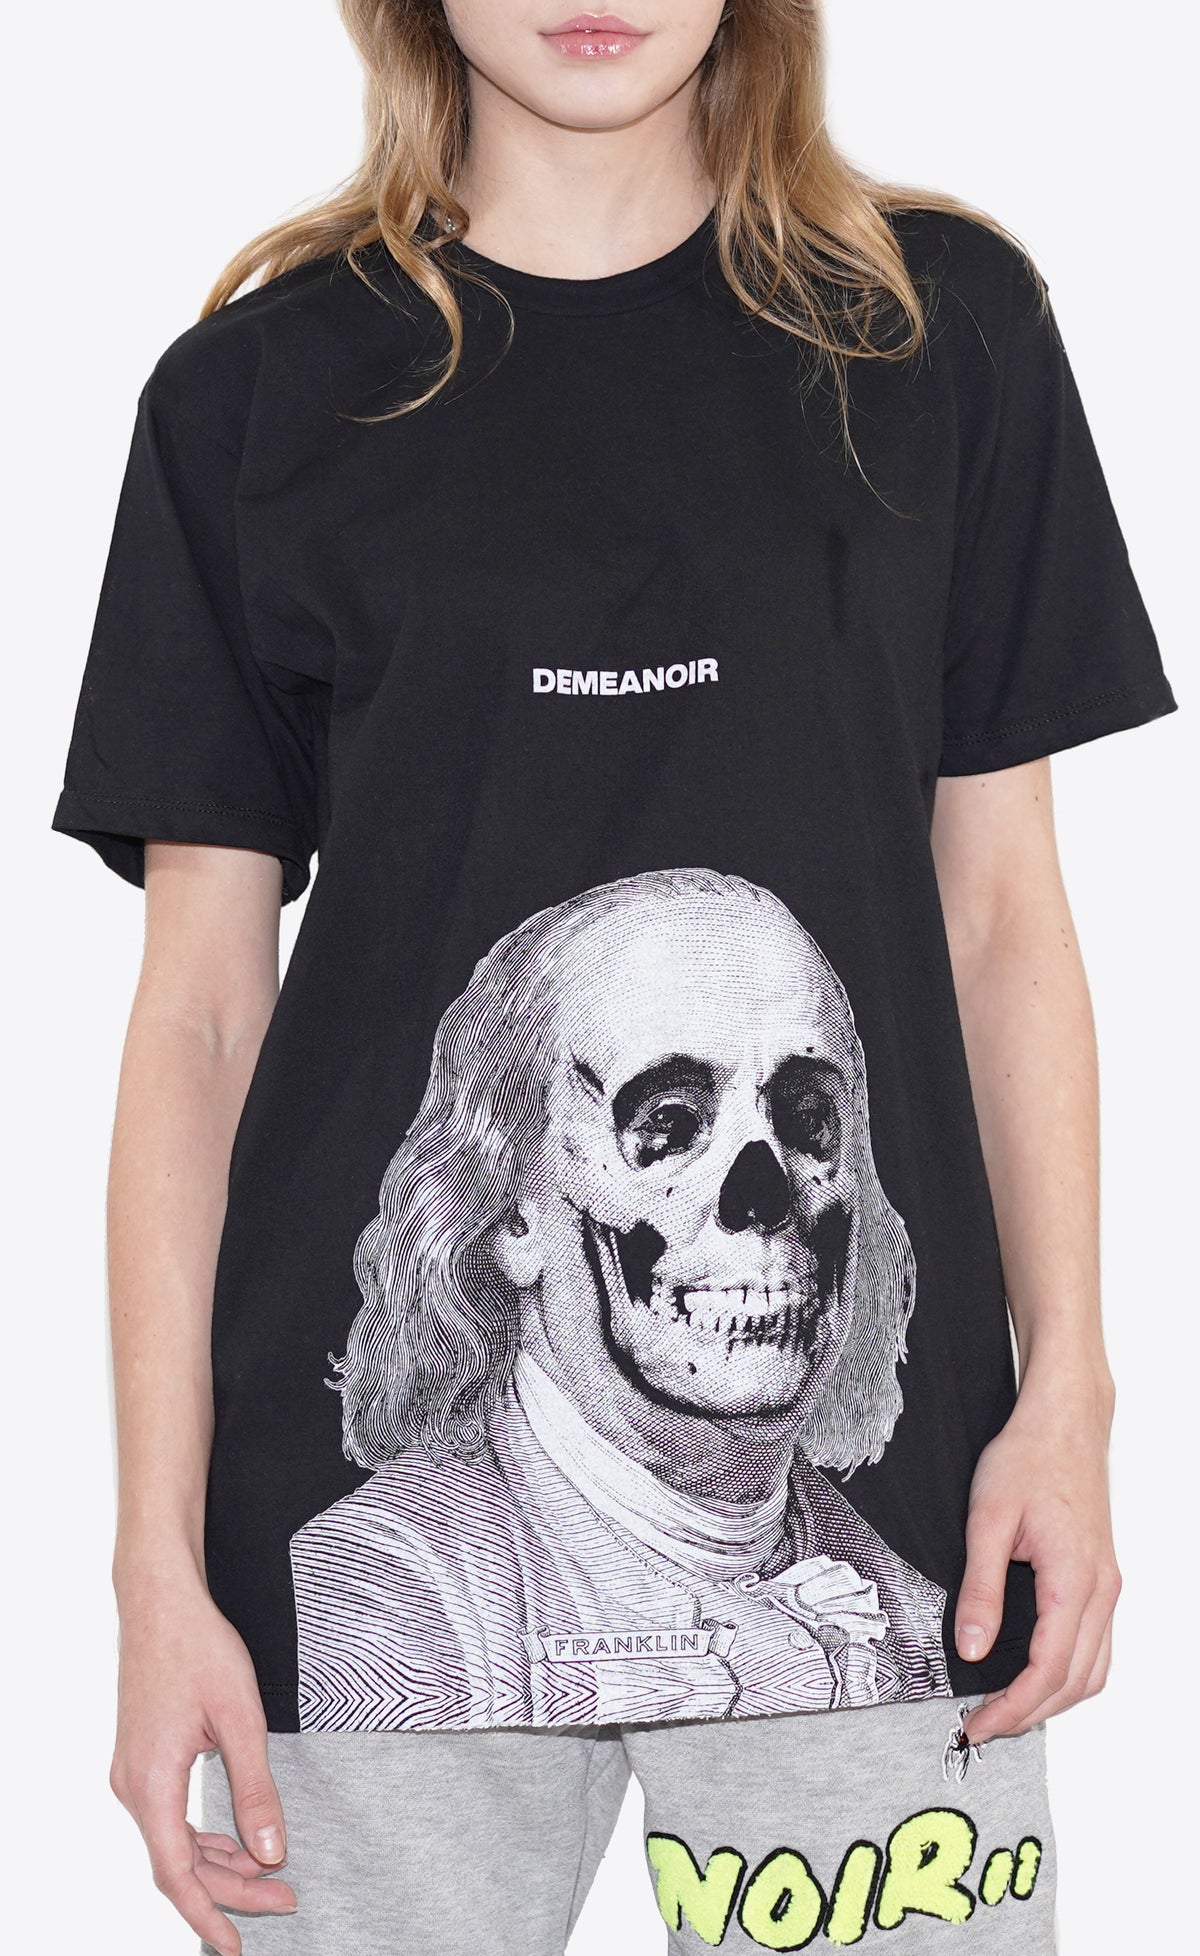 Benjamin Franklin T-Shirt